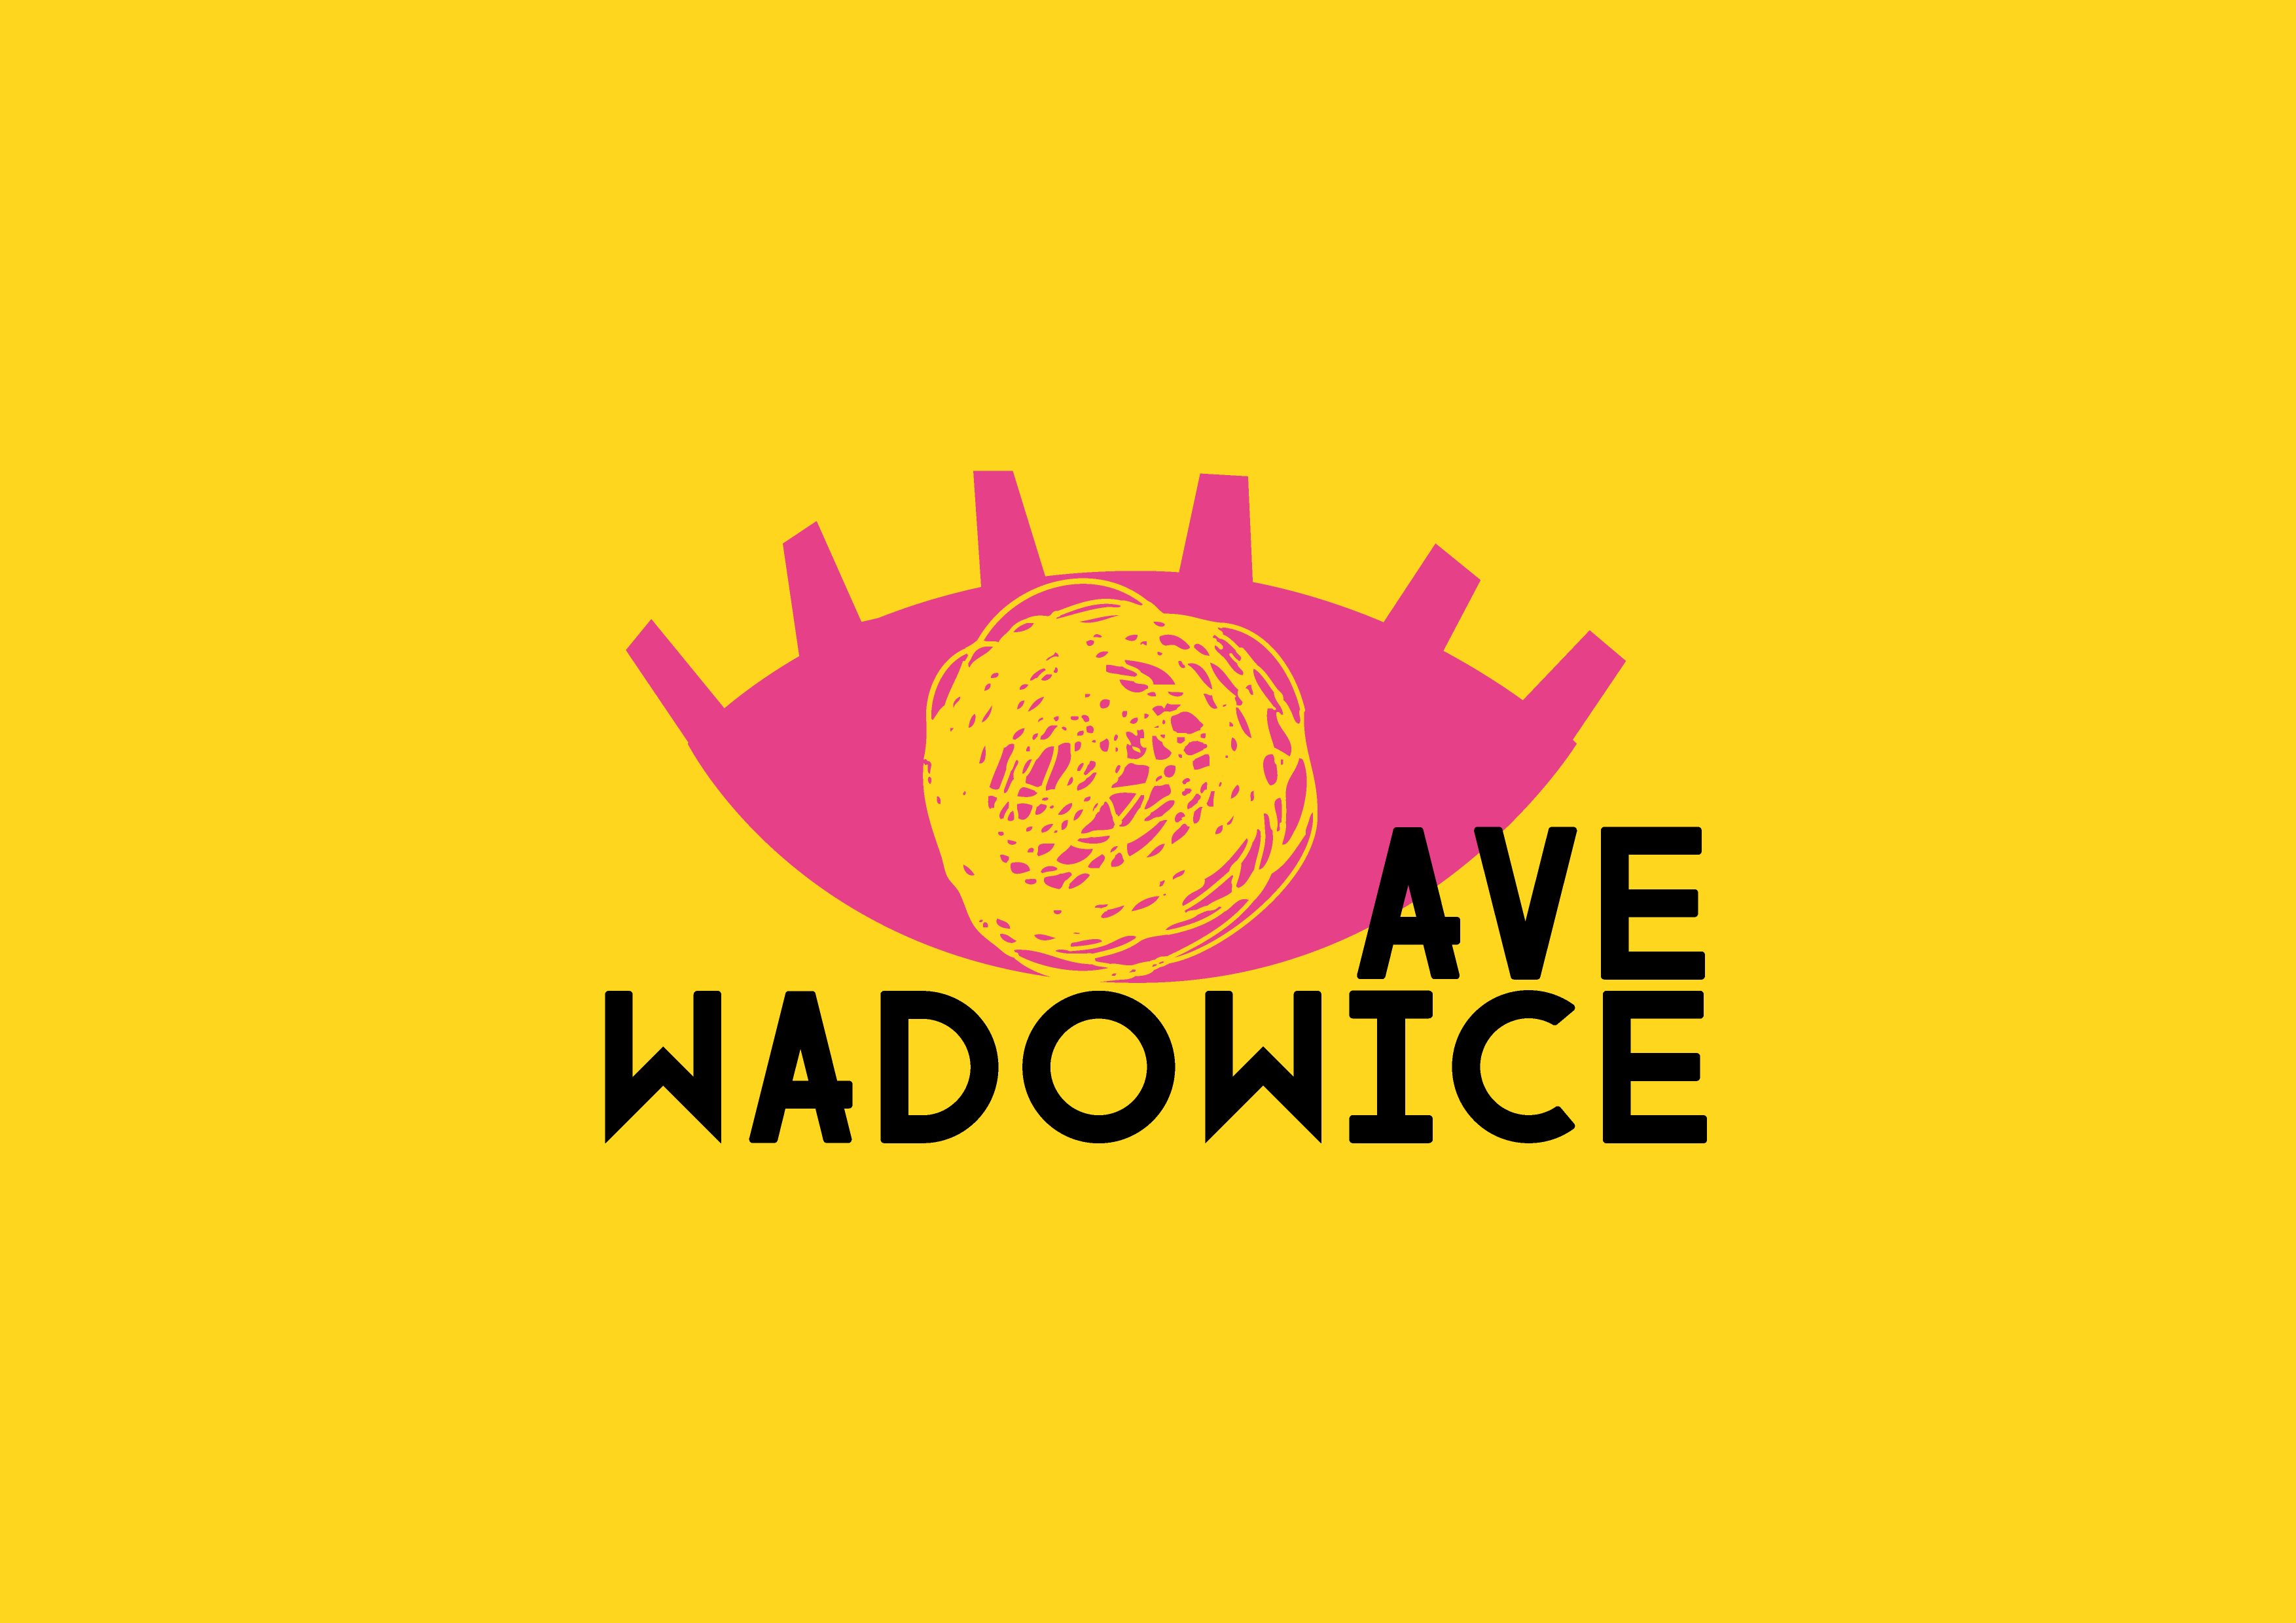 ave wadowice logo 01 - AVE WADOWICE